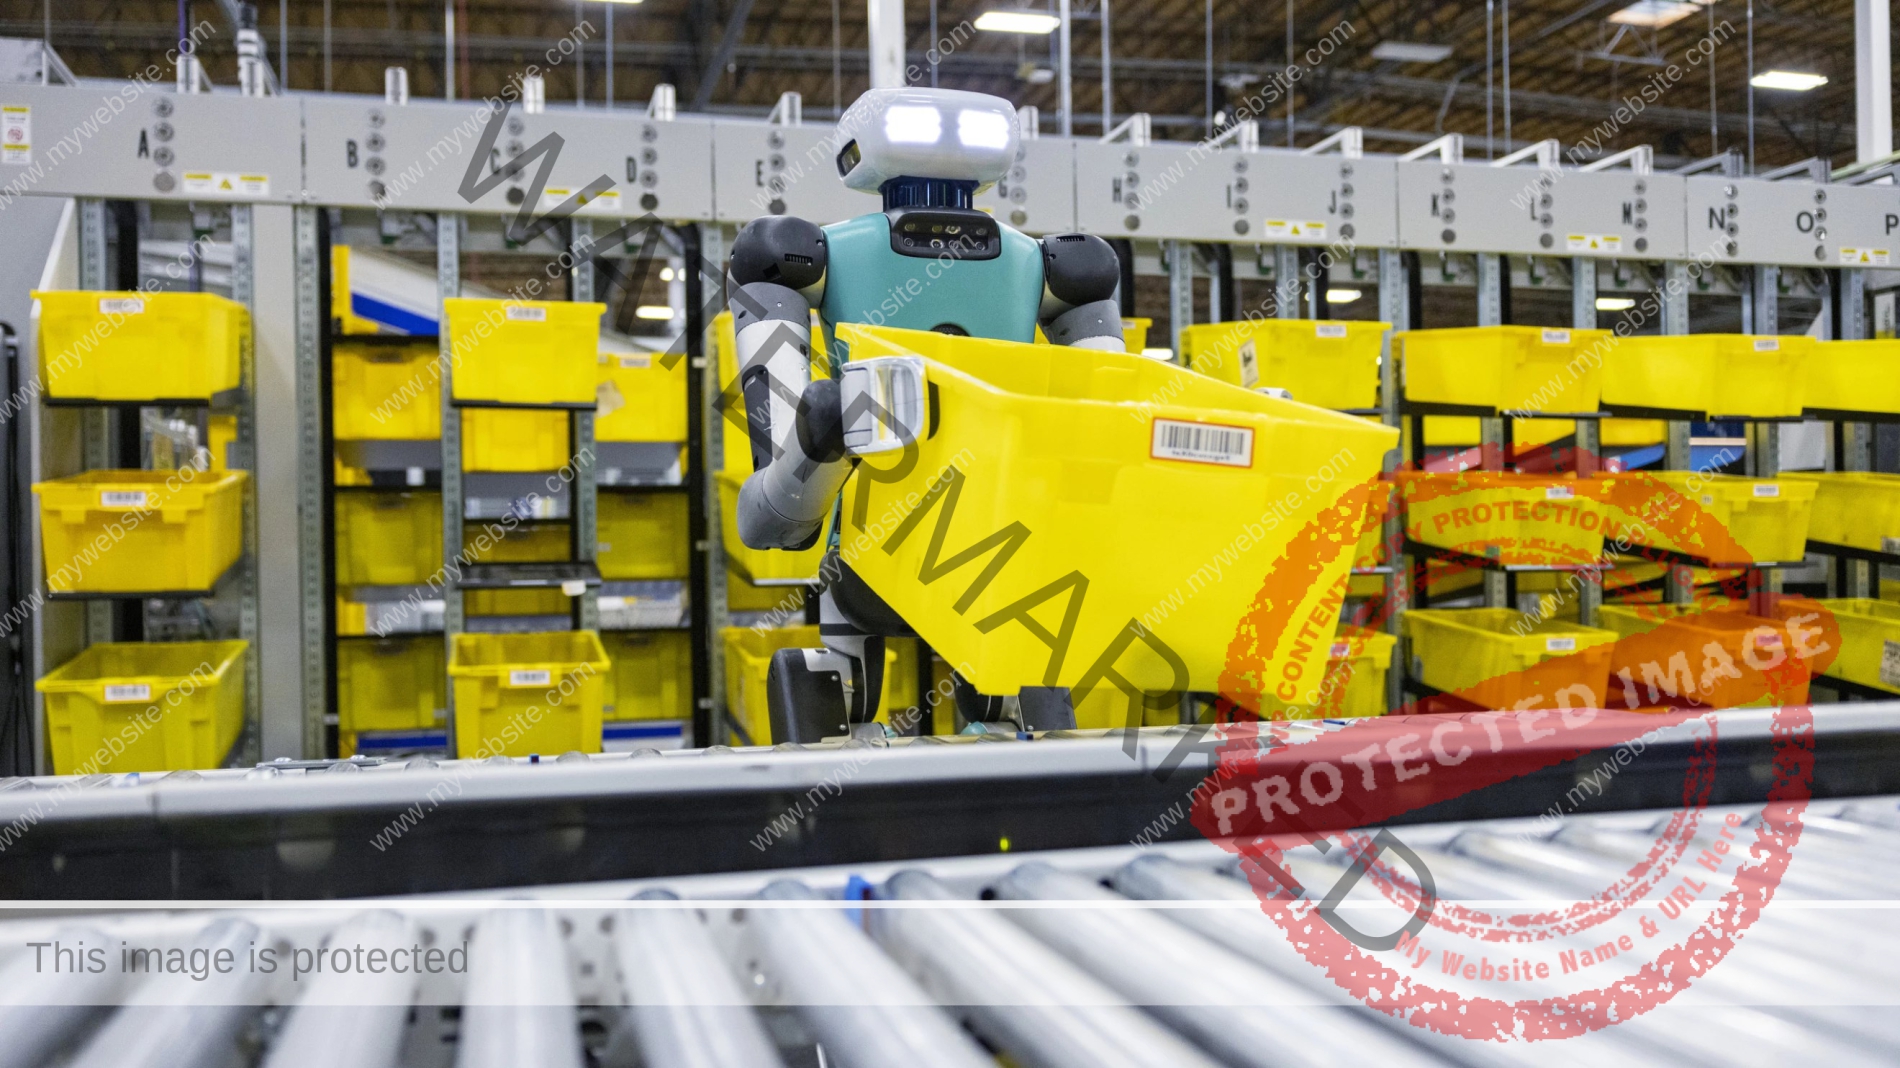 Amazon Agility Robotics Digit handling a tub in a warehouse